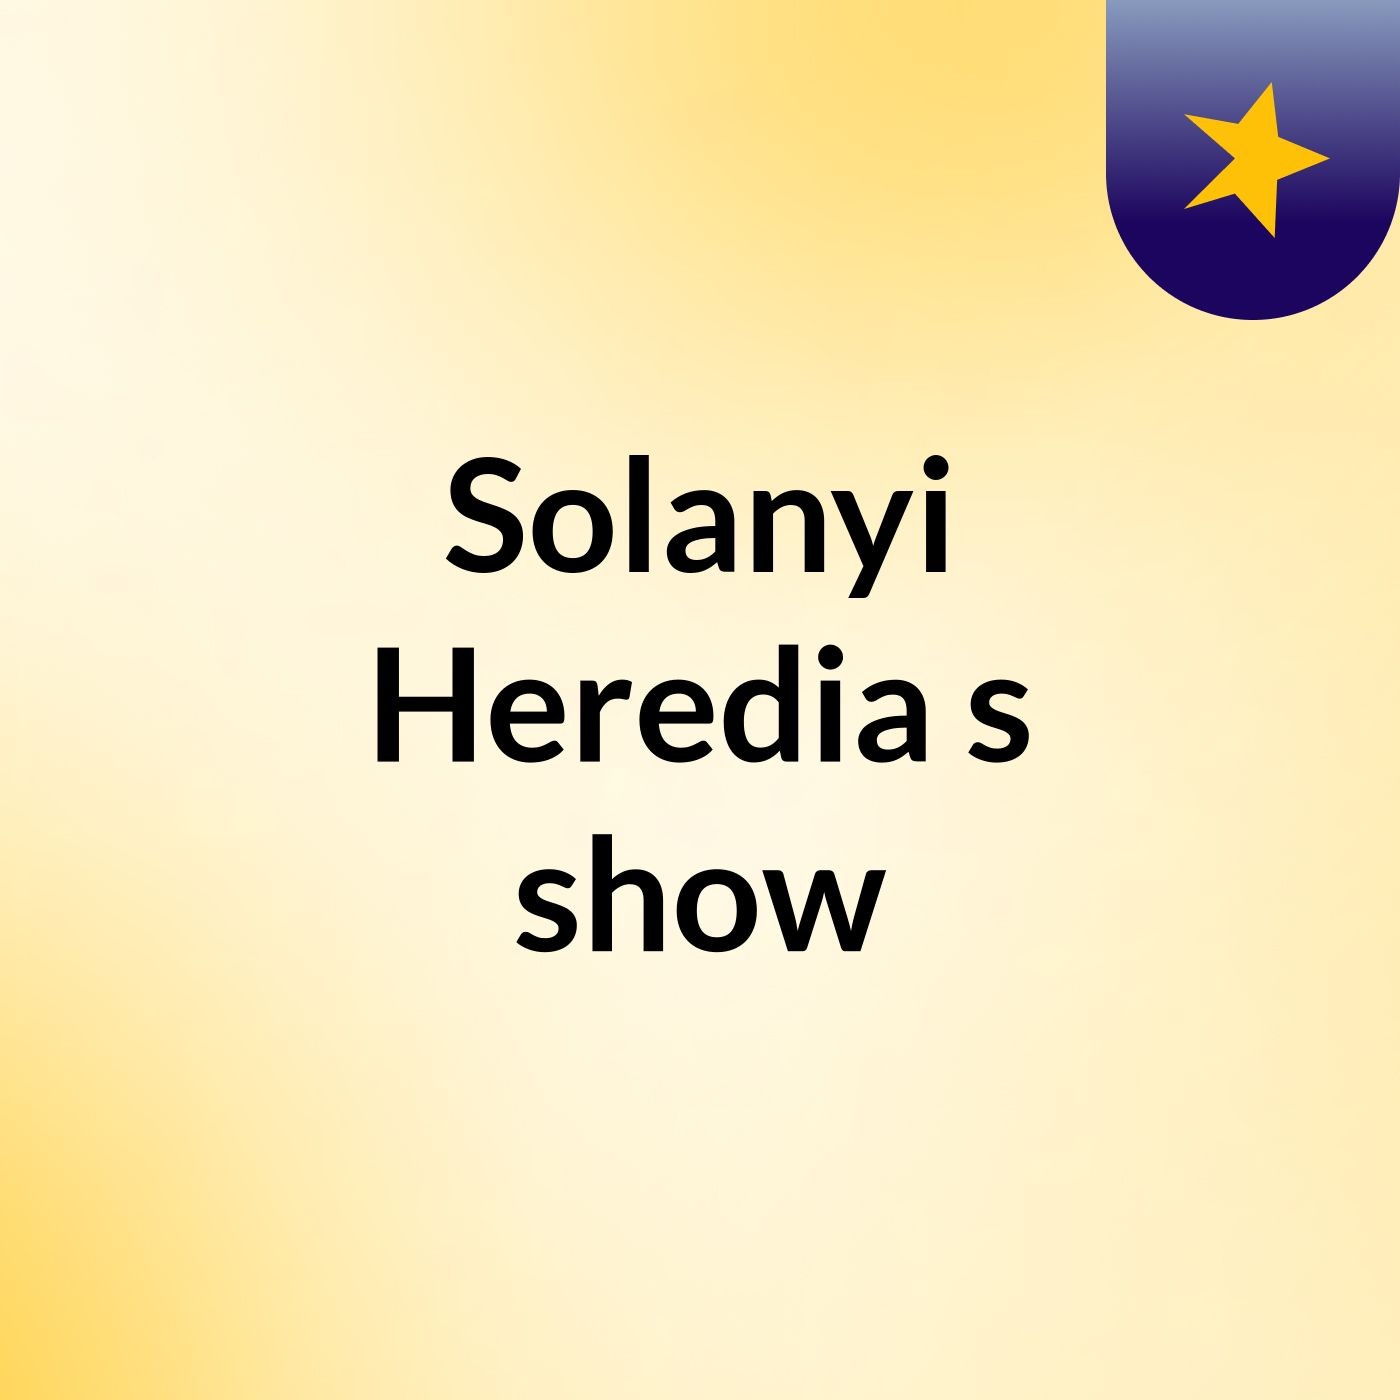 Solanyi Heredia's show